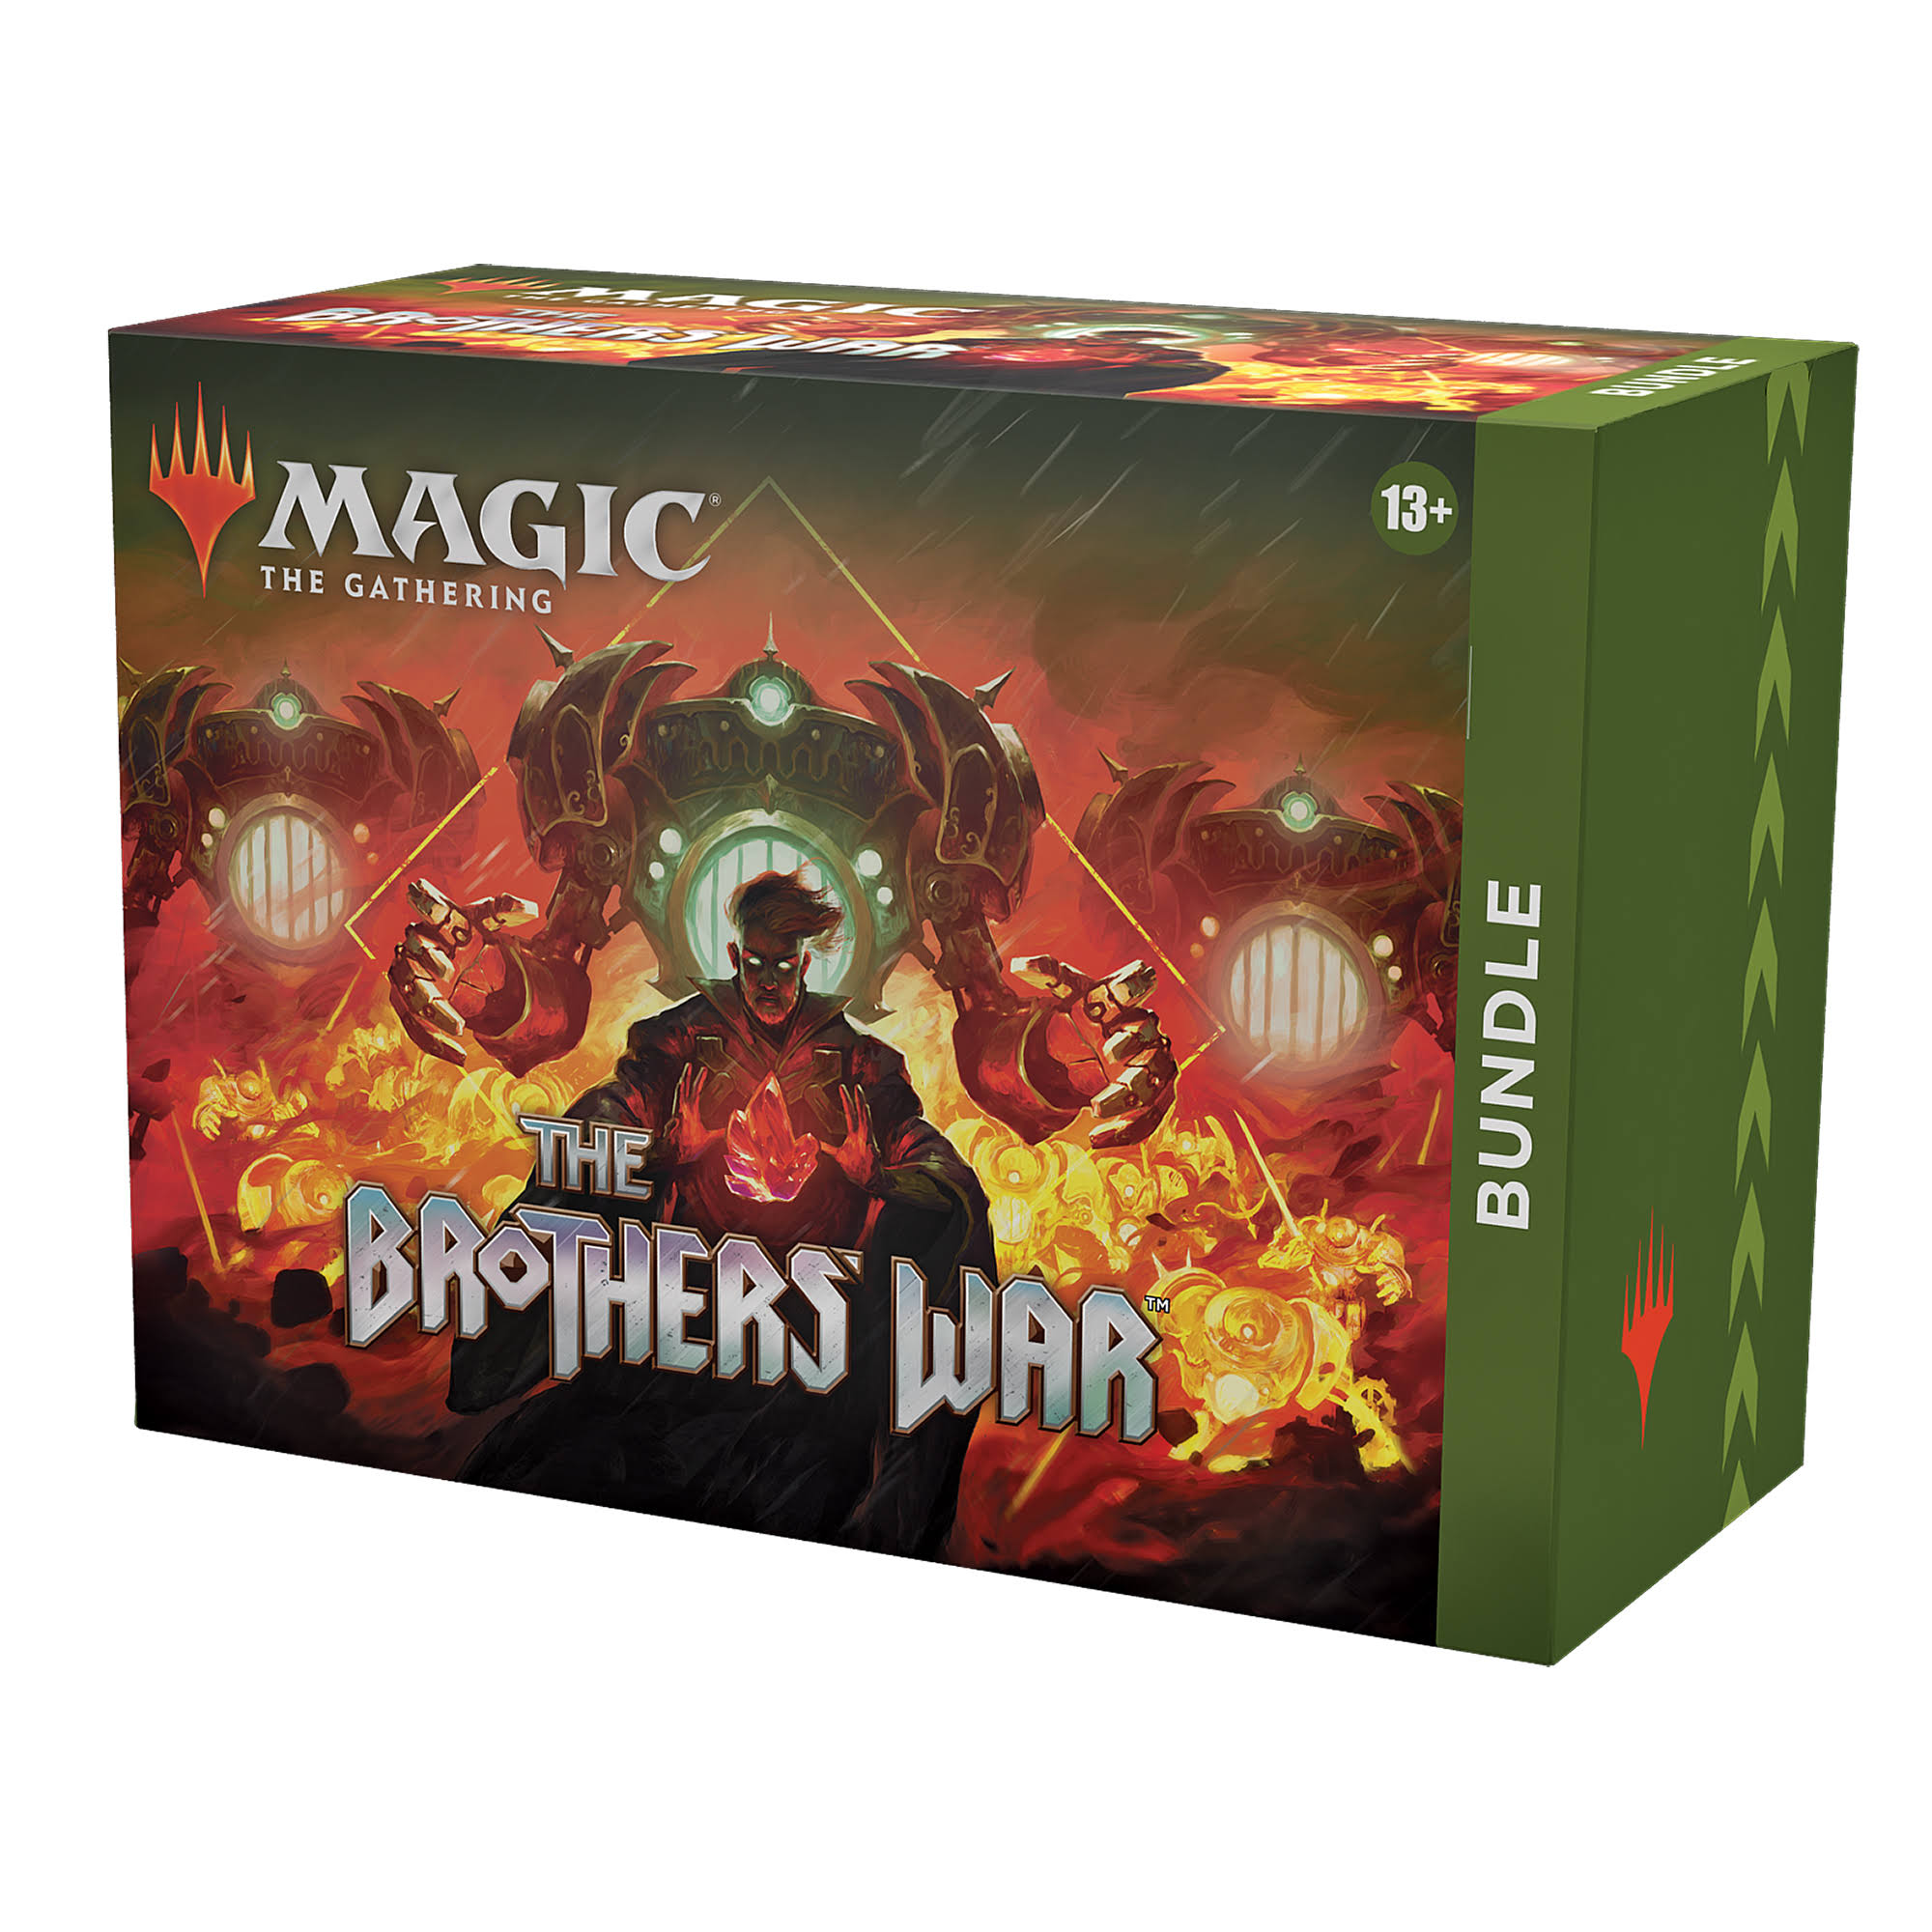 Magic The Gathering: The Brothers' War Bundle